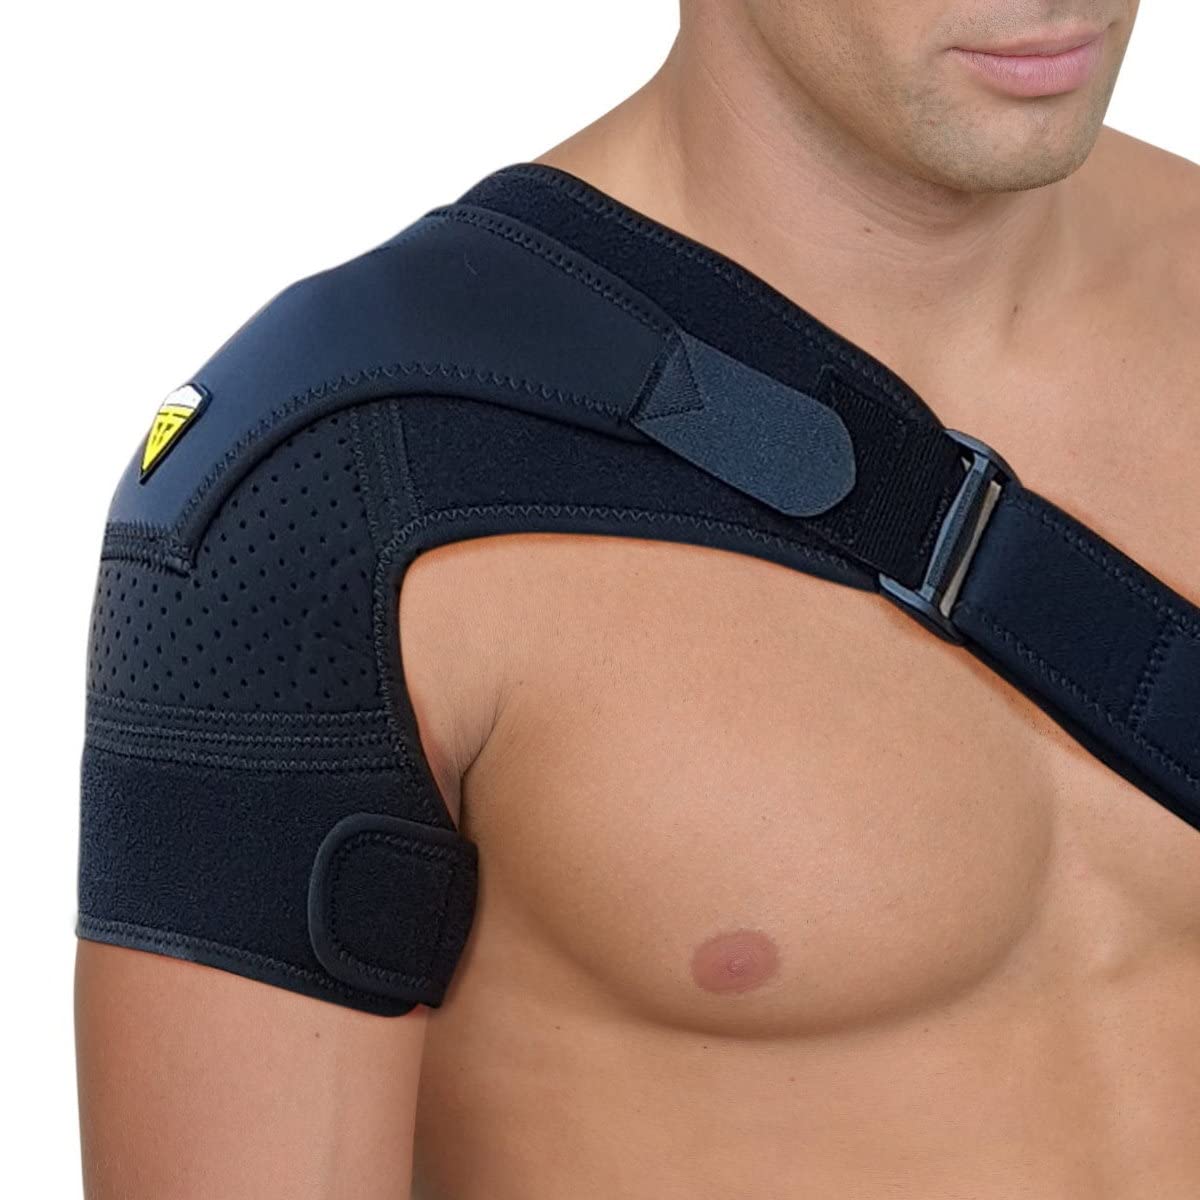 Shoulder and Arm Compression Sleeve